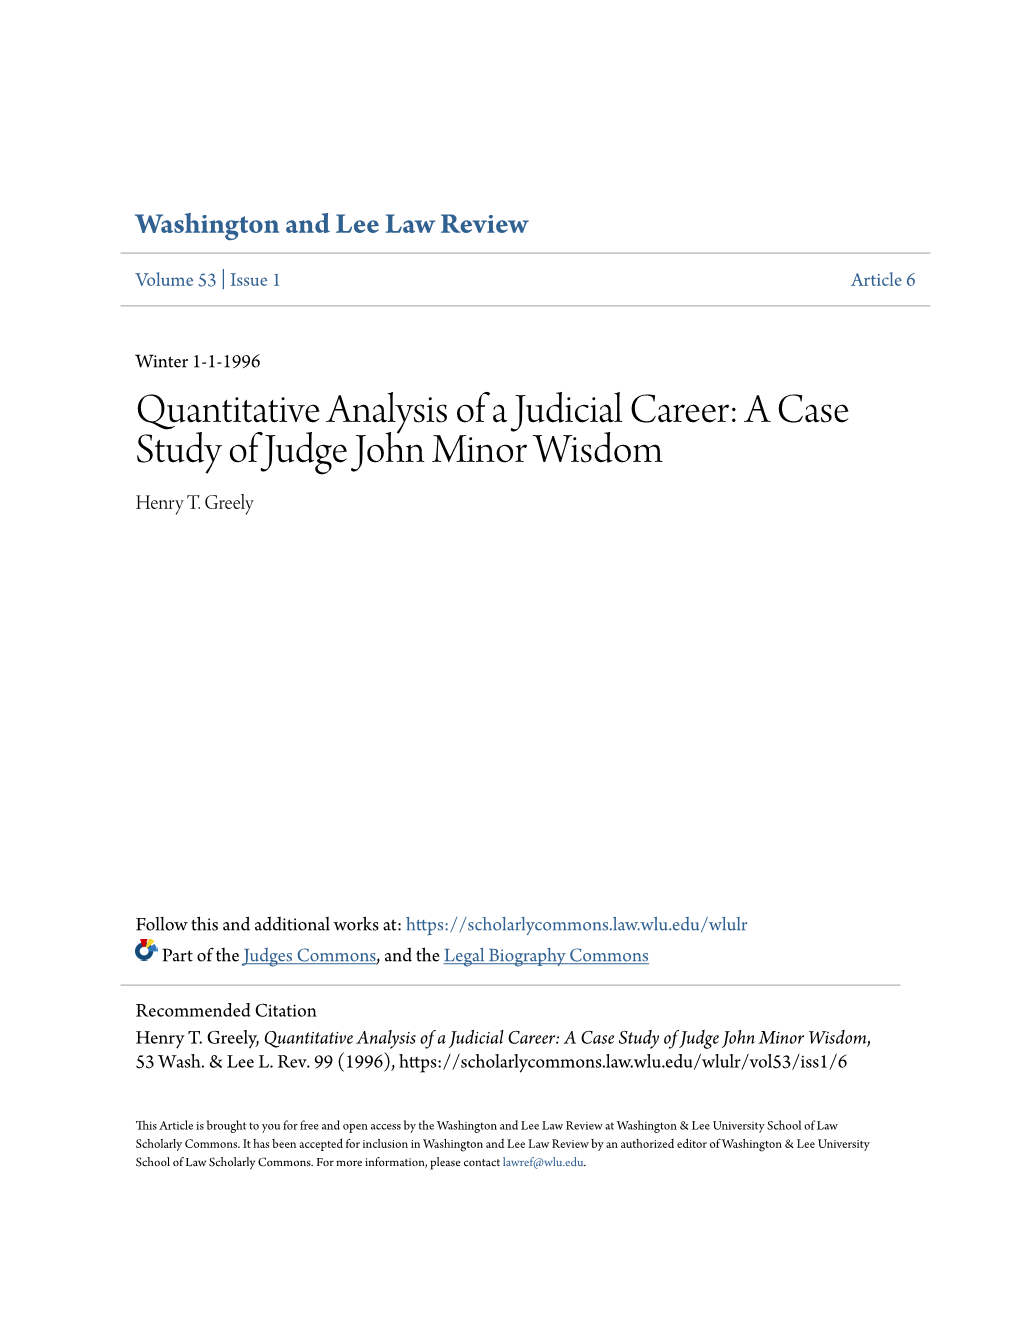 A Case Study of Judge John Minor Wisdom Henry T